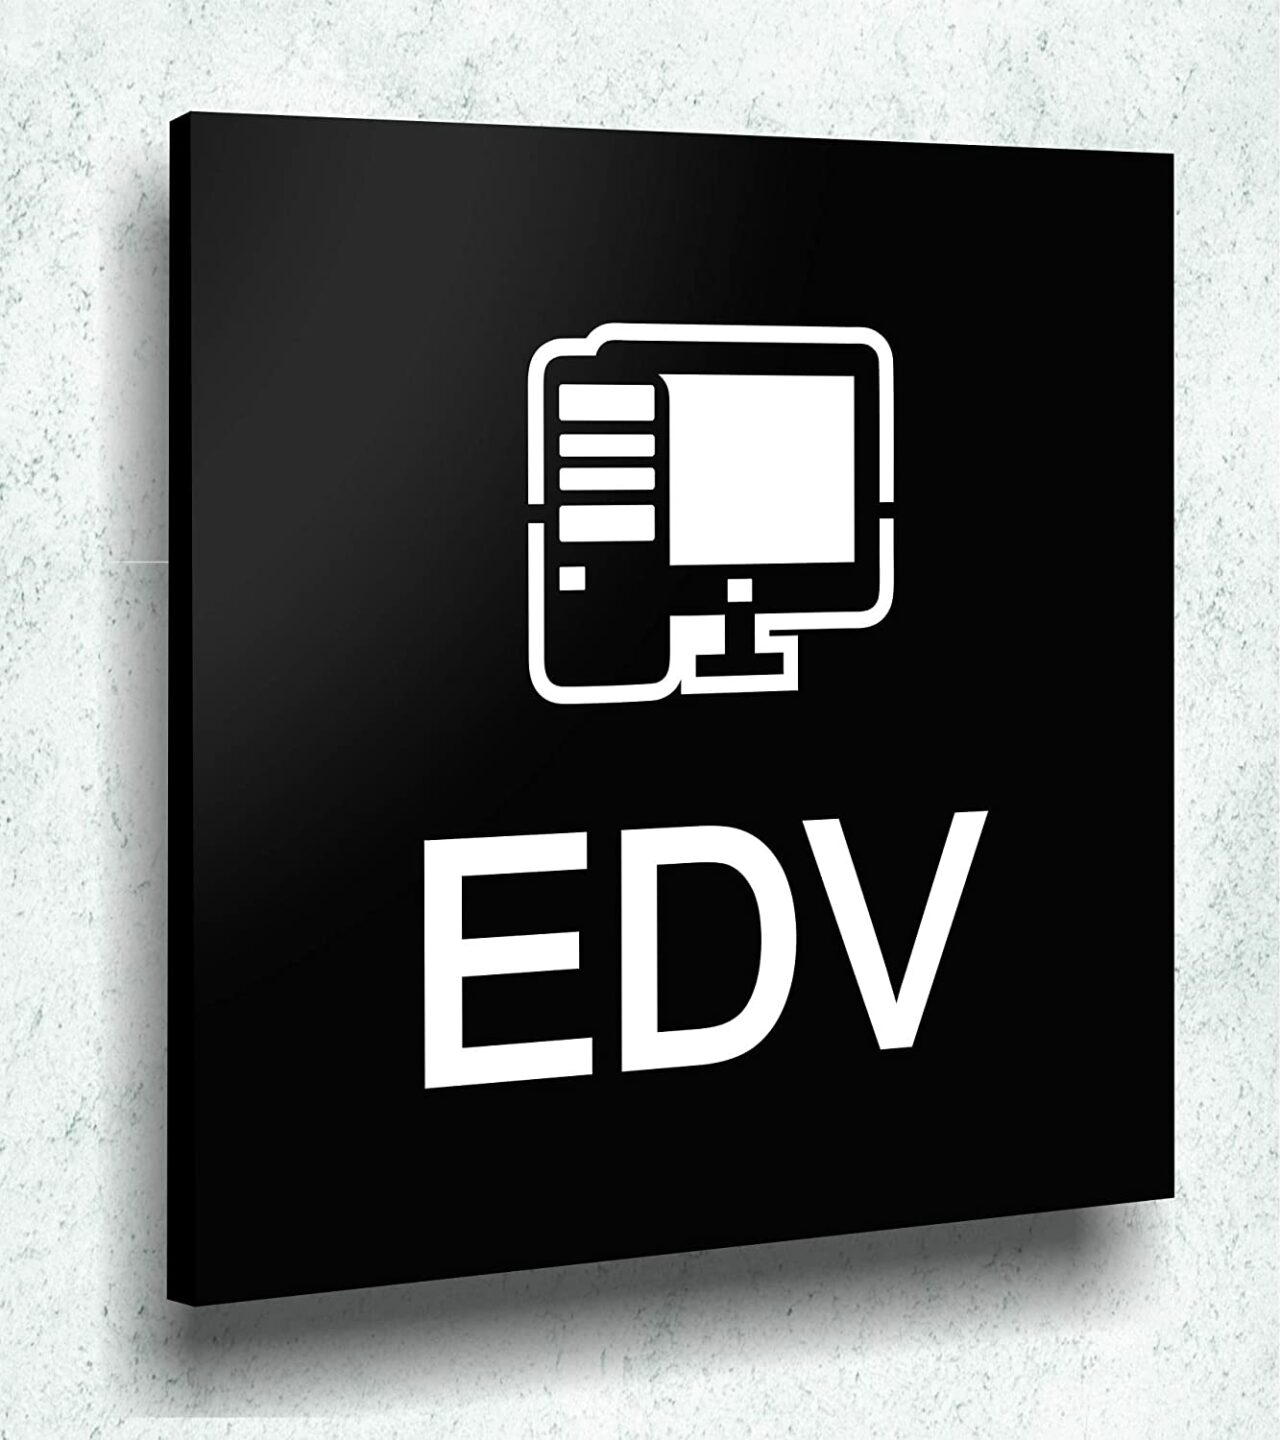 Türschild EDV Büro Schild Schwarz Matt UV Druck 12 x 12cm - 3mm Acrylglas - Made in Germany Art.Nr. A2075